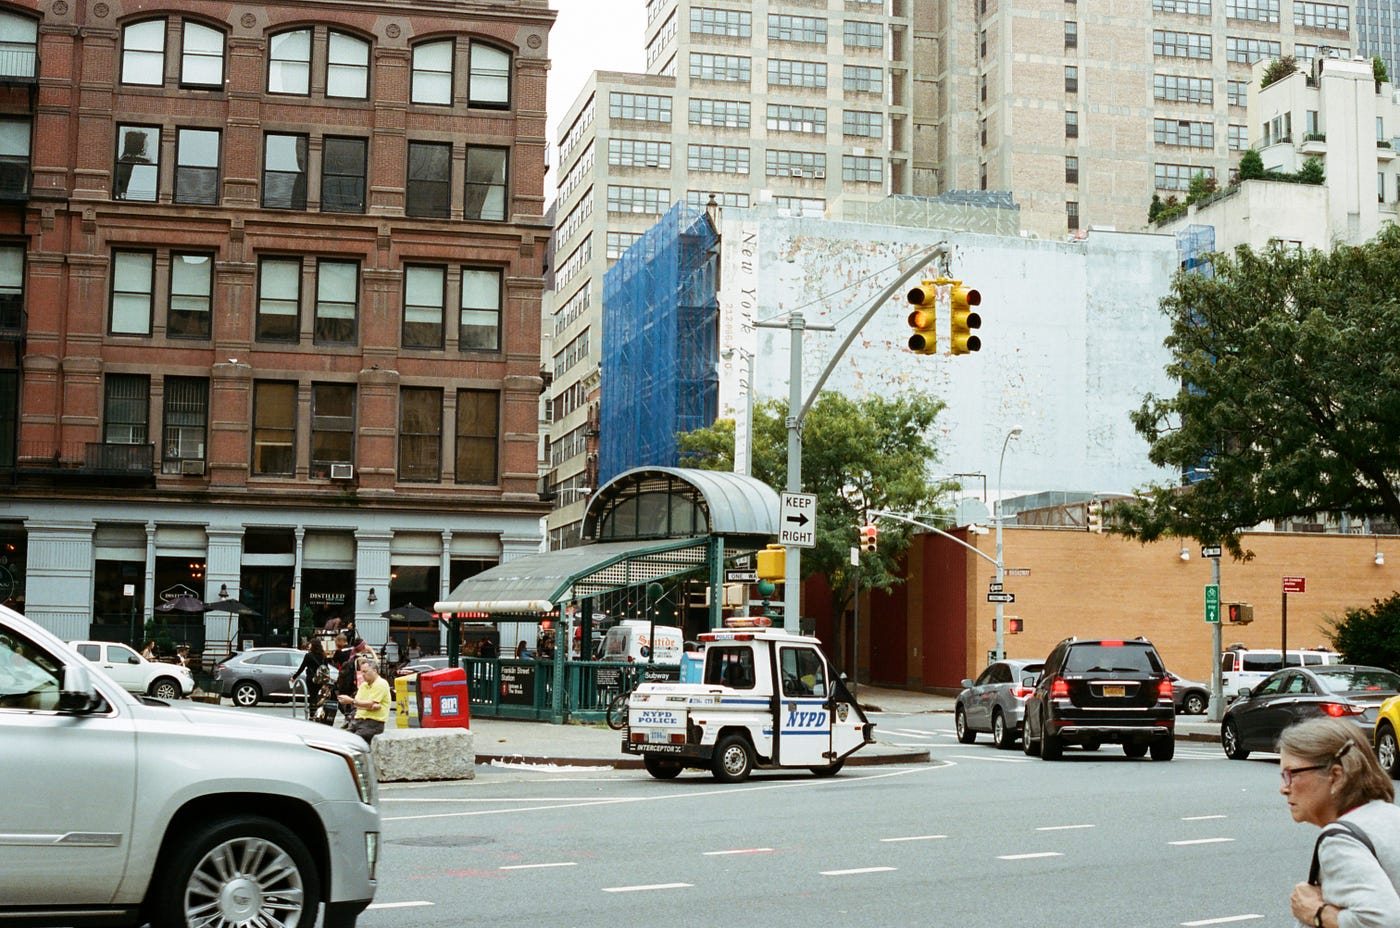 New York, New York - 35mm Color Film Single Roll